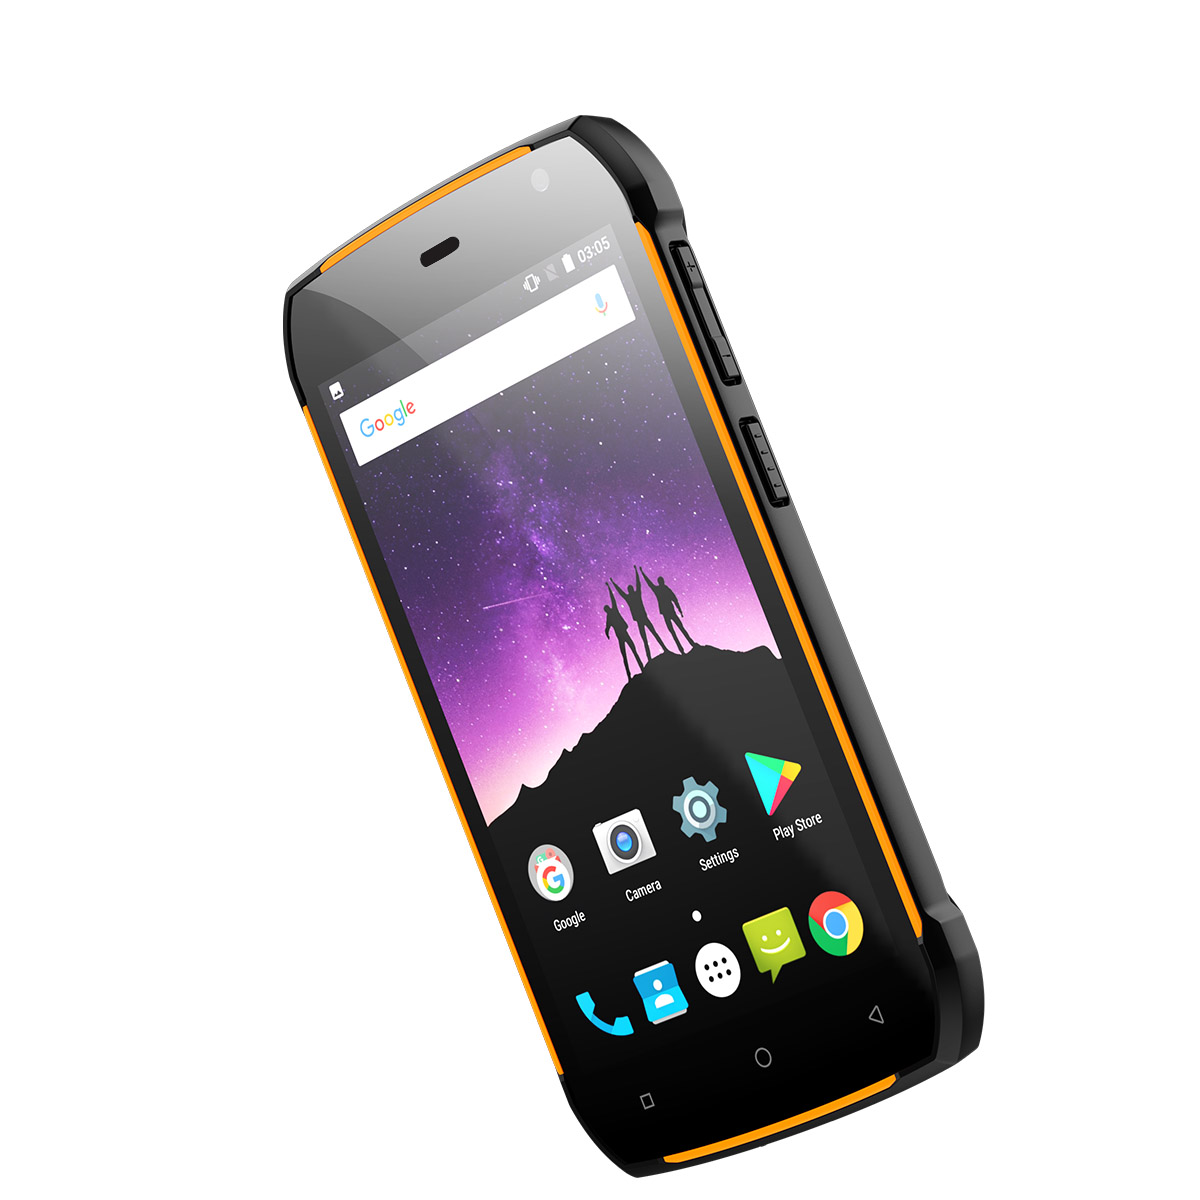 Uhans K5000 4G smartphone Orange